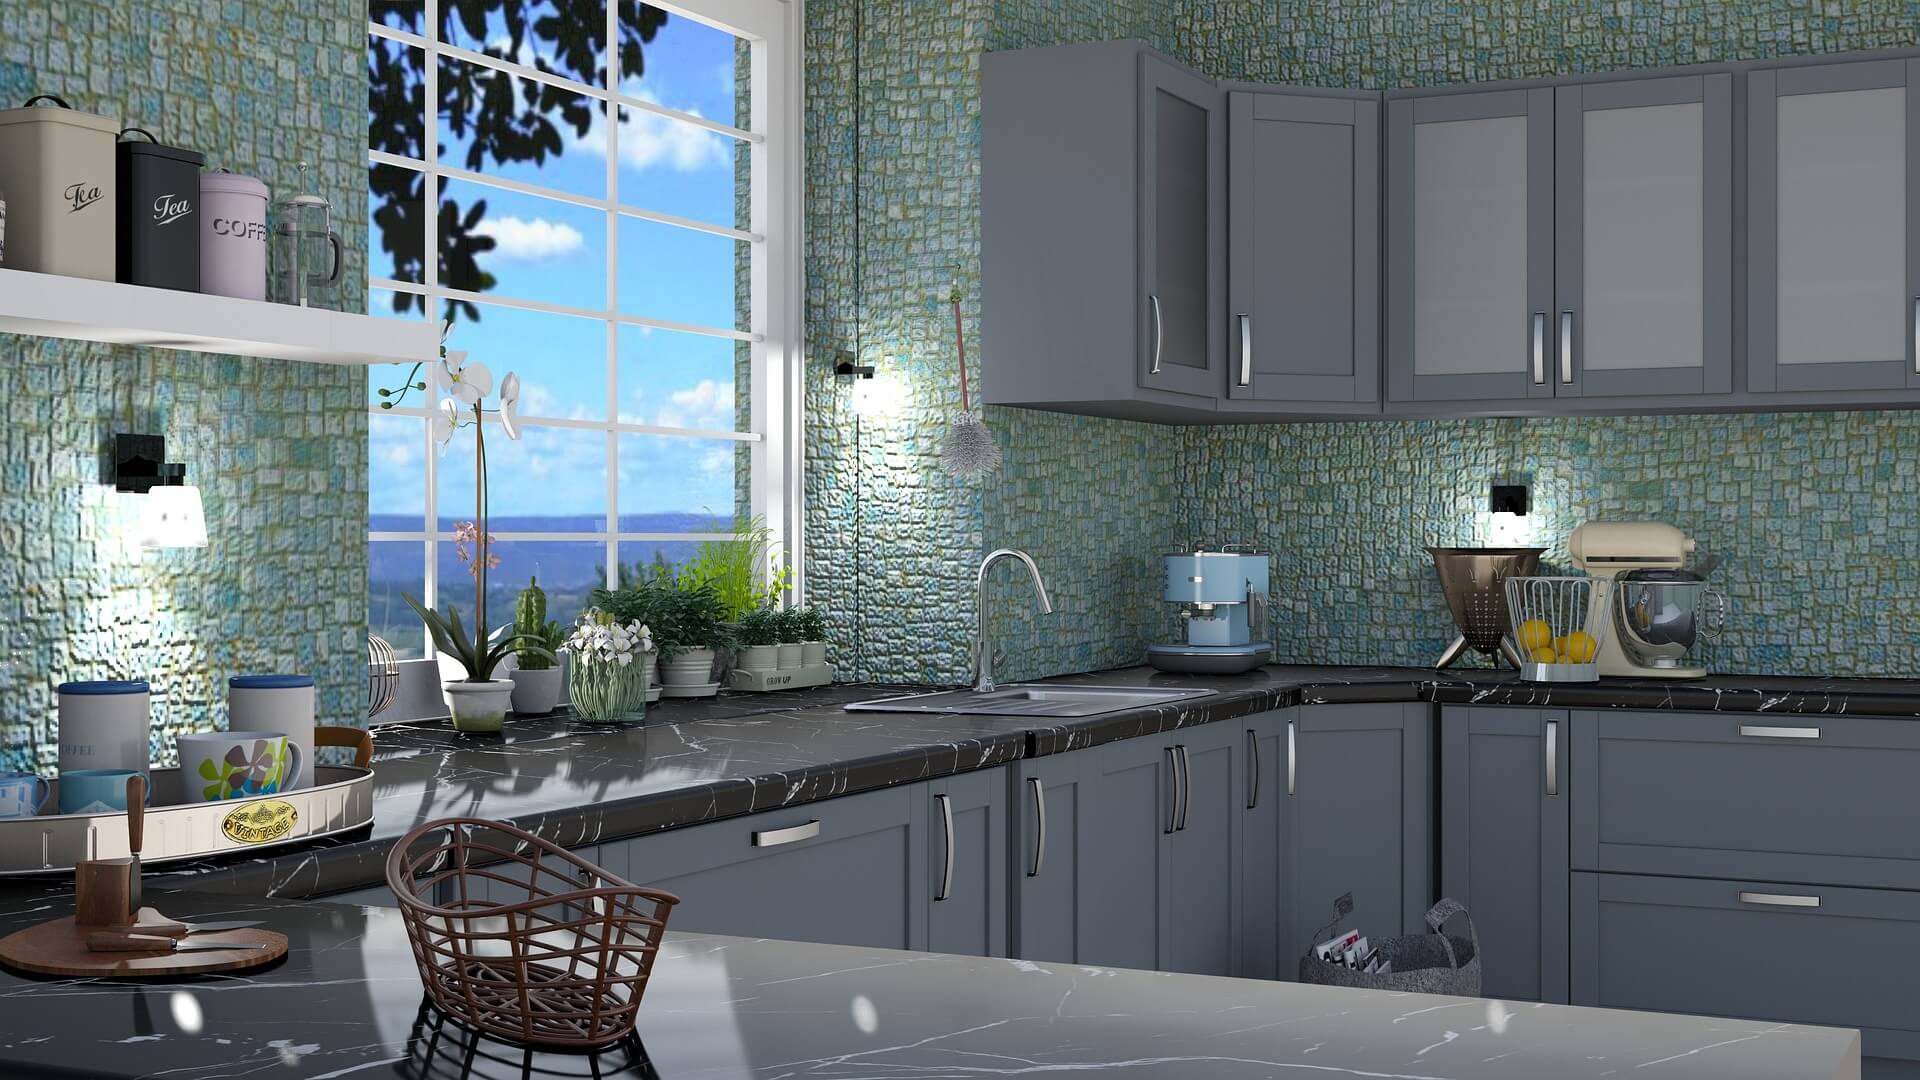 Mediterranean kitchen design – Fresh vibes for remodeling your kitchen, 1, eurocraftswfl.com